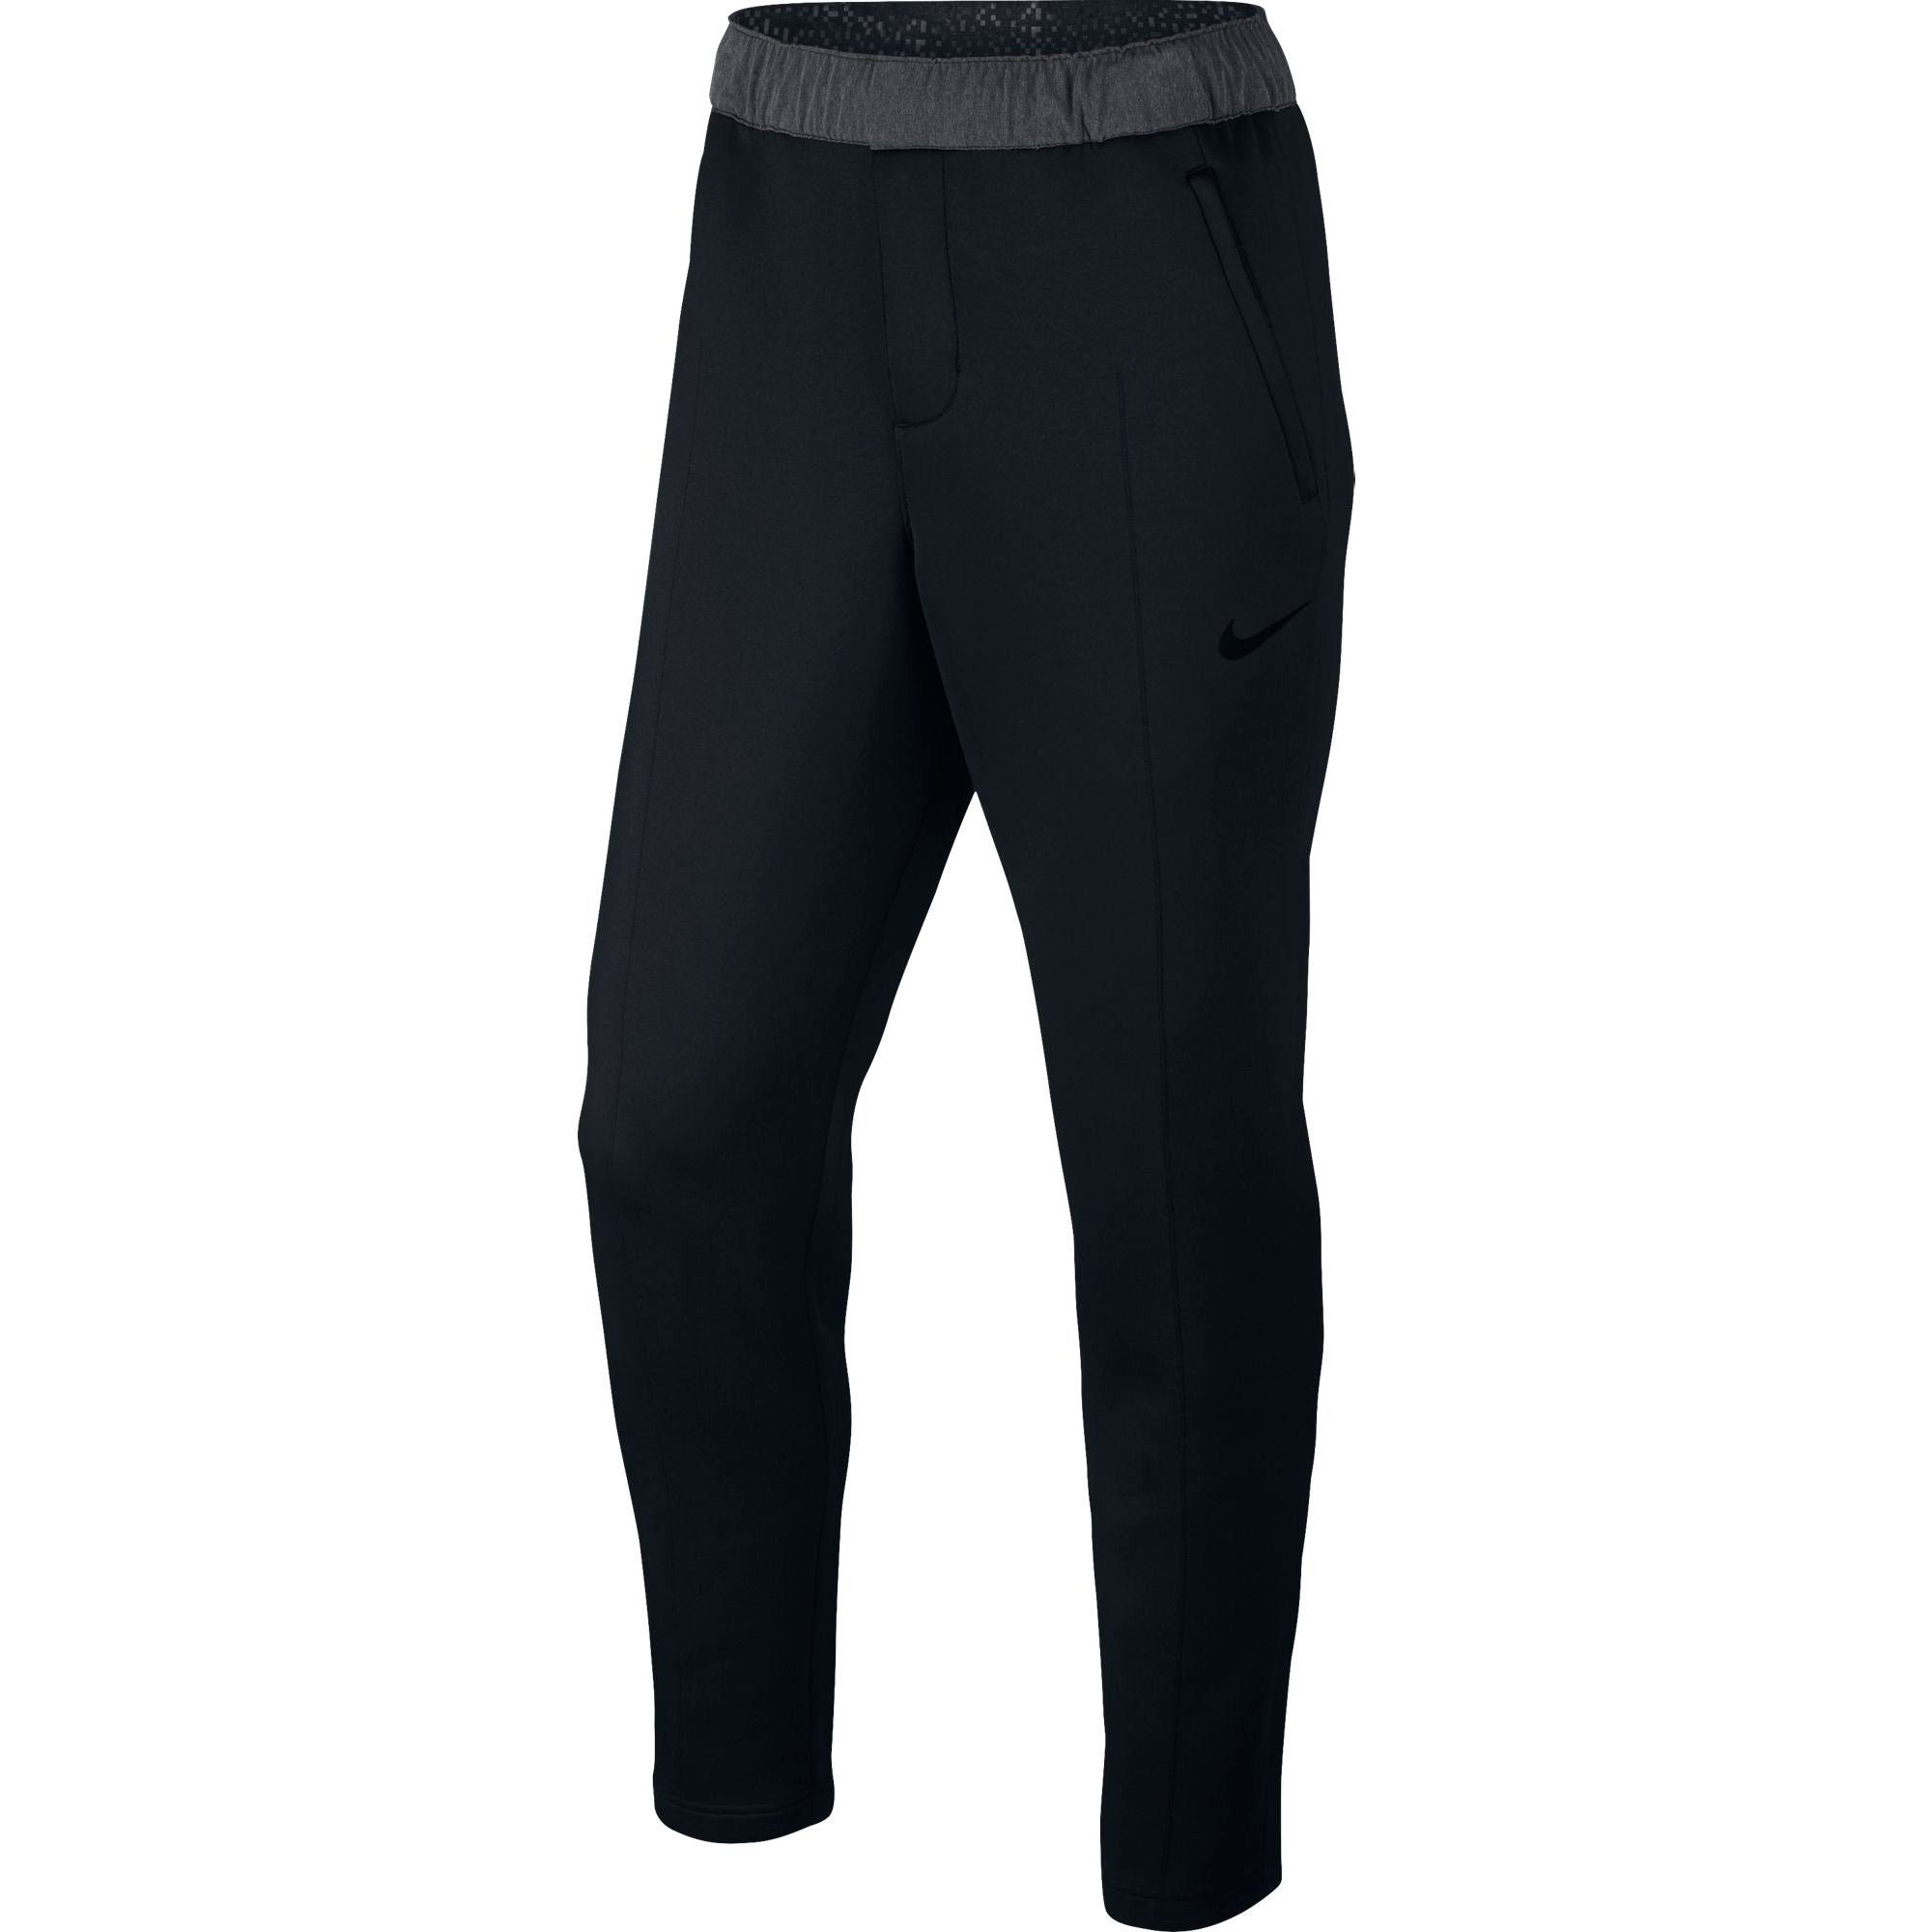 Nike Lebron Therma Sphere Max Pants - Black/Anthracite – SwiSh basketball